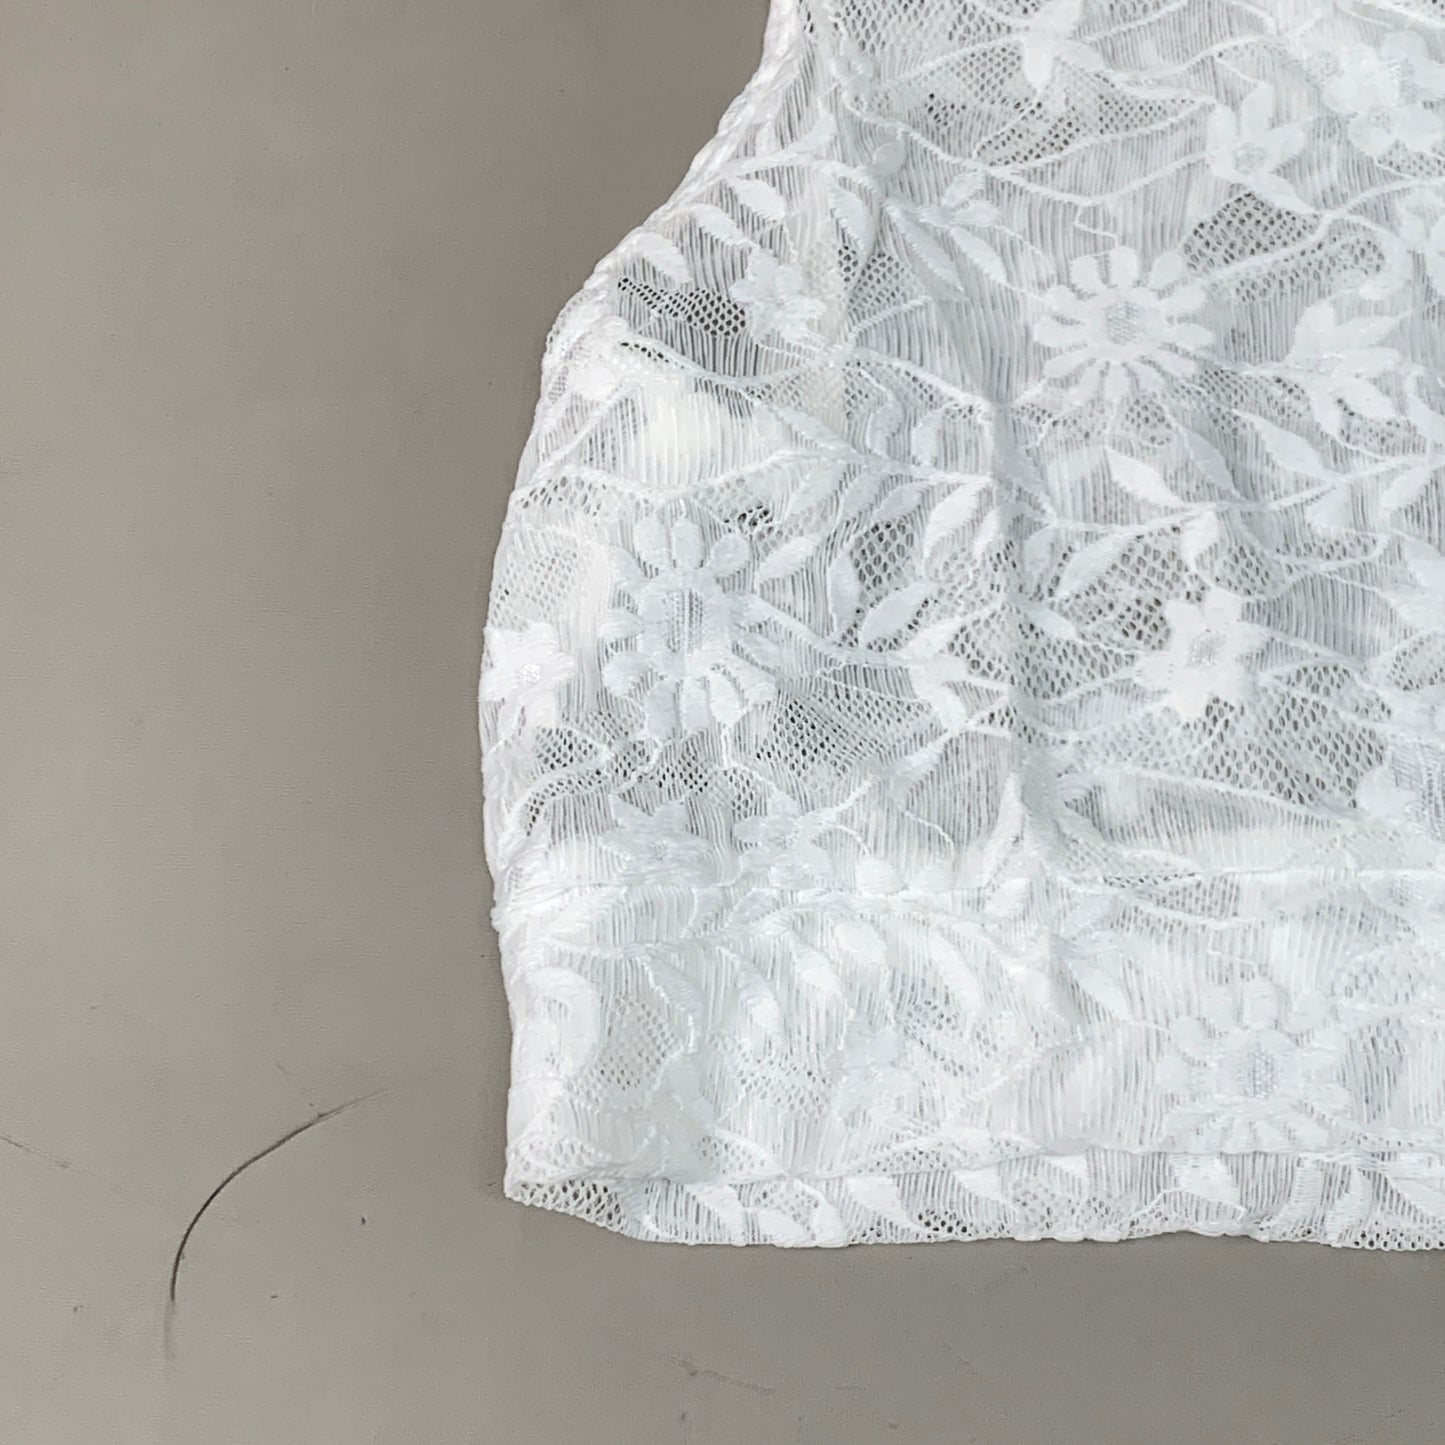 HALFTEE Full Lace Tank Nylon & Spandex Blend Floral White XL (23)